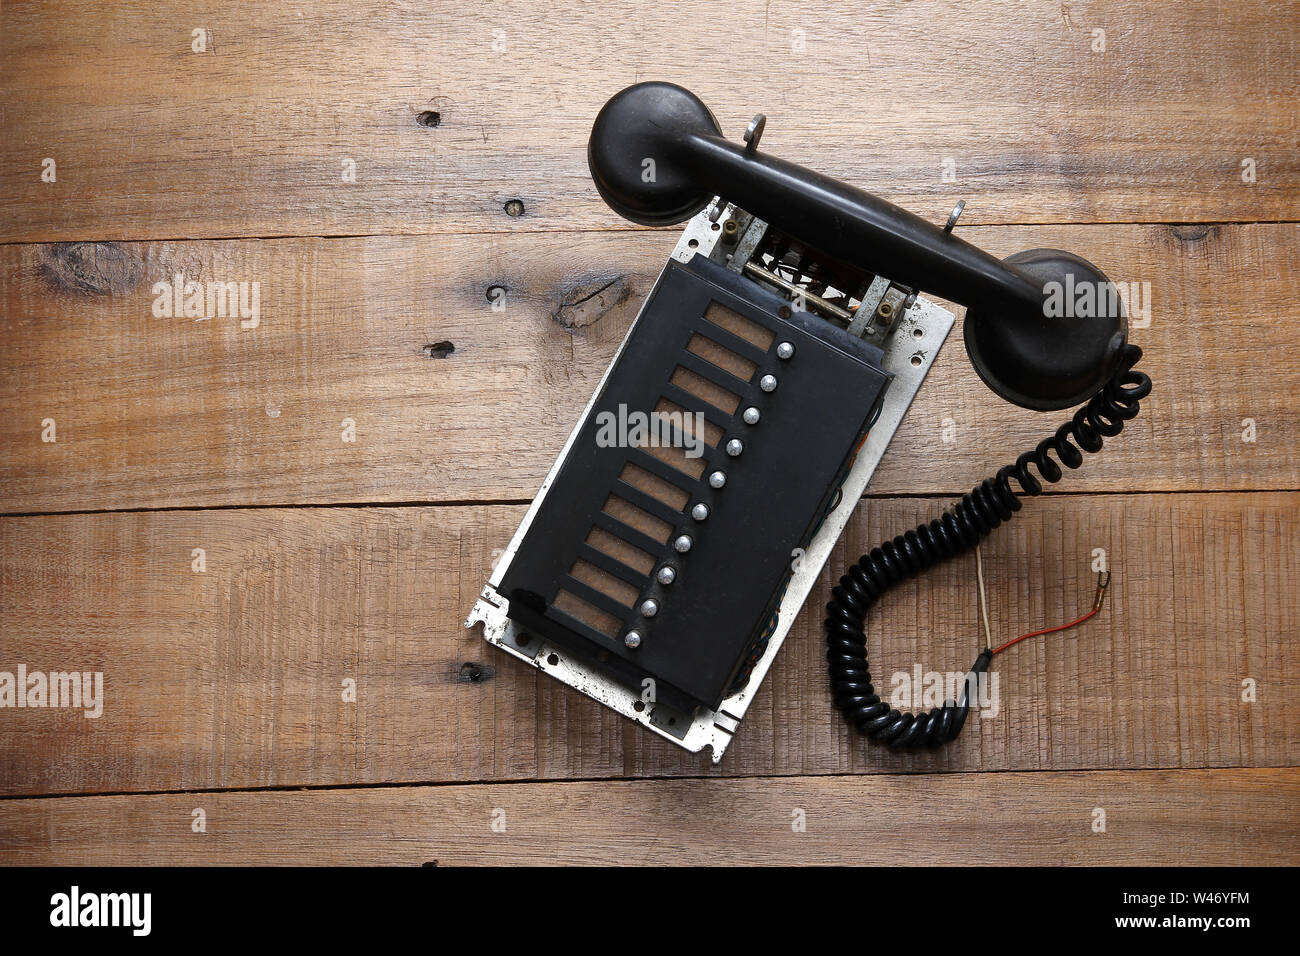 Broken Retro Phone on Wooden Background Stock Photo